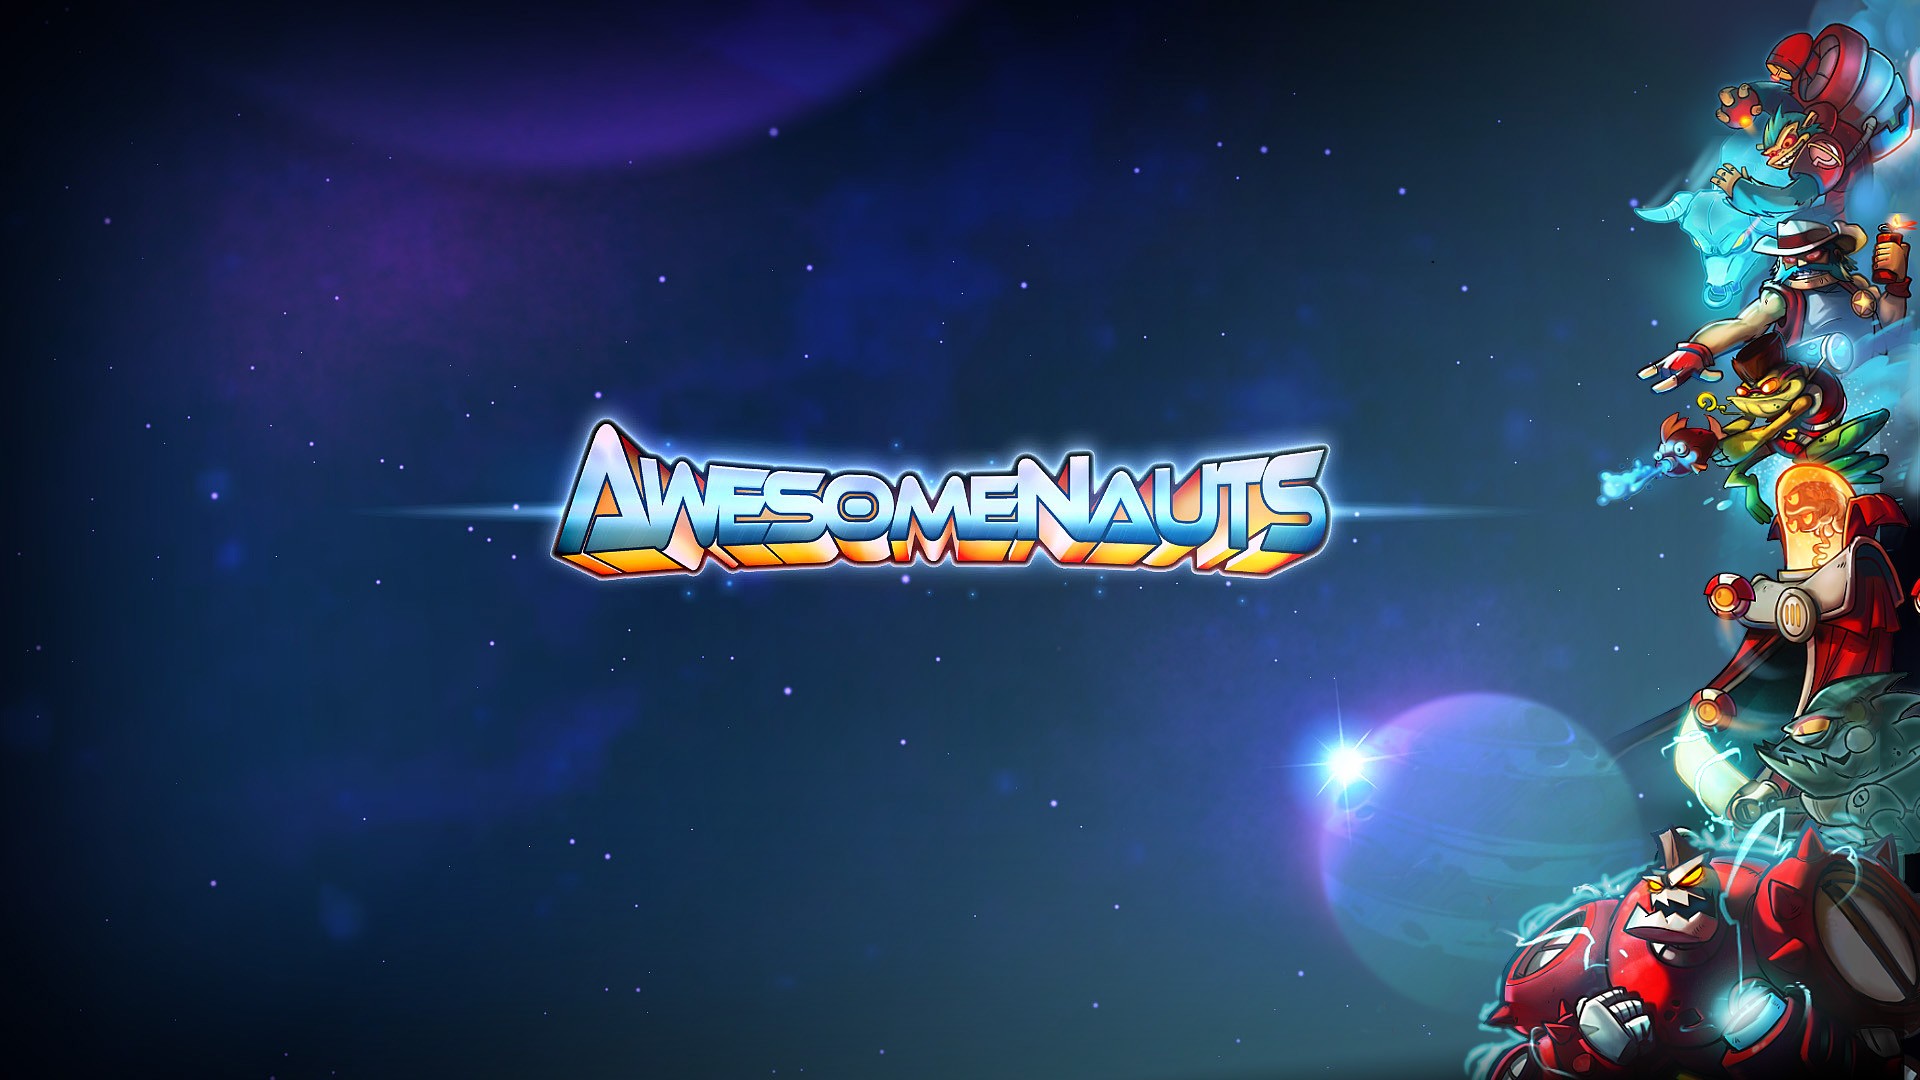 Awesomenauts Image Logo HD Wallpaper And Background